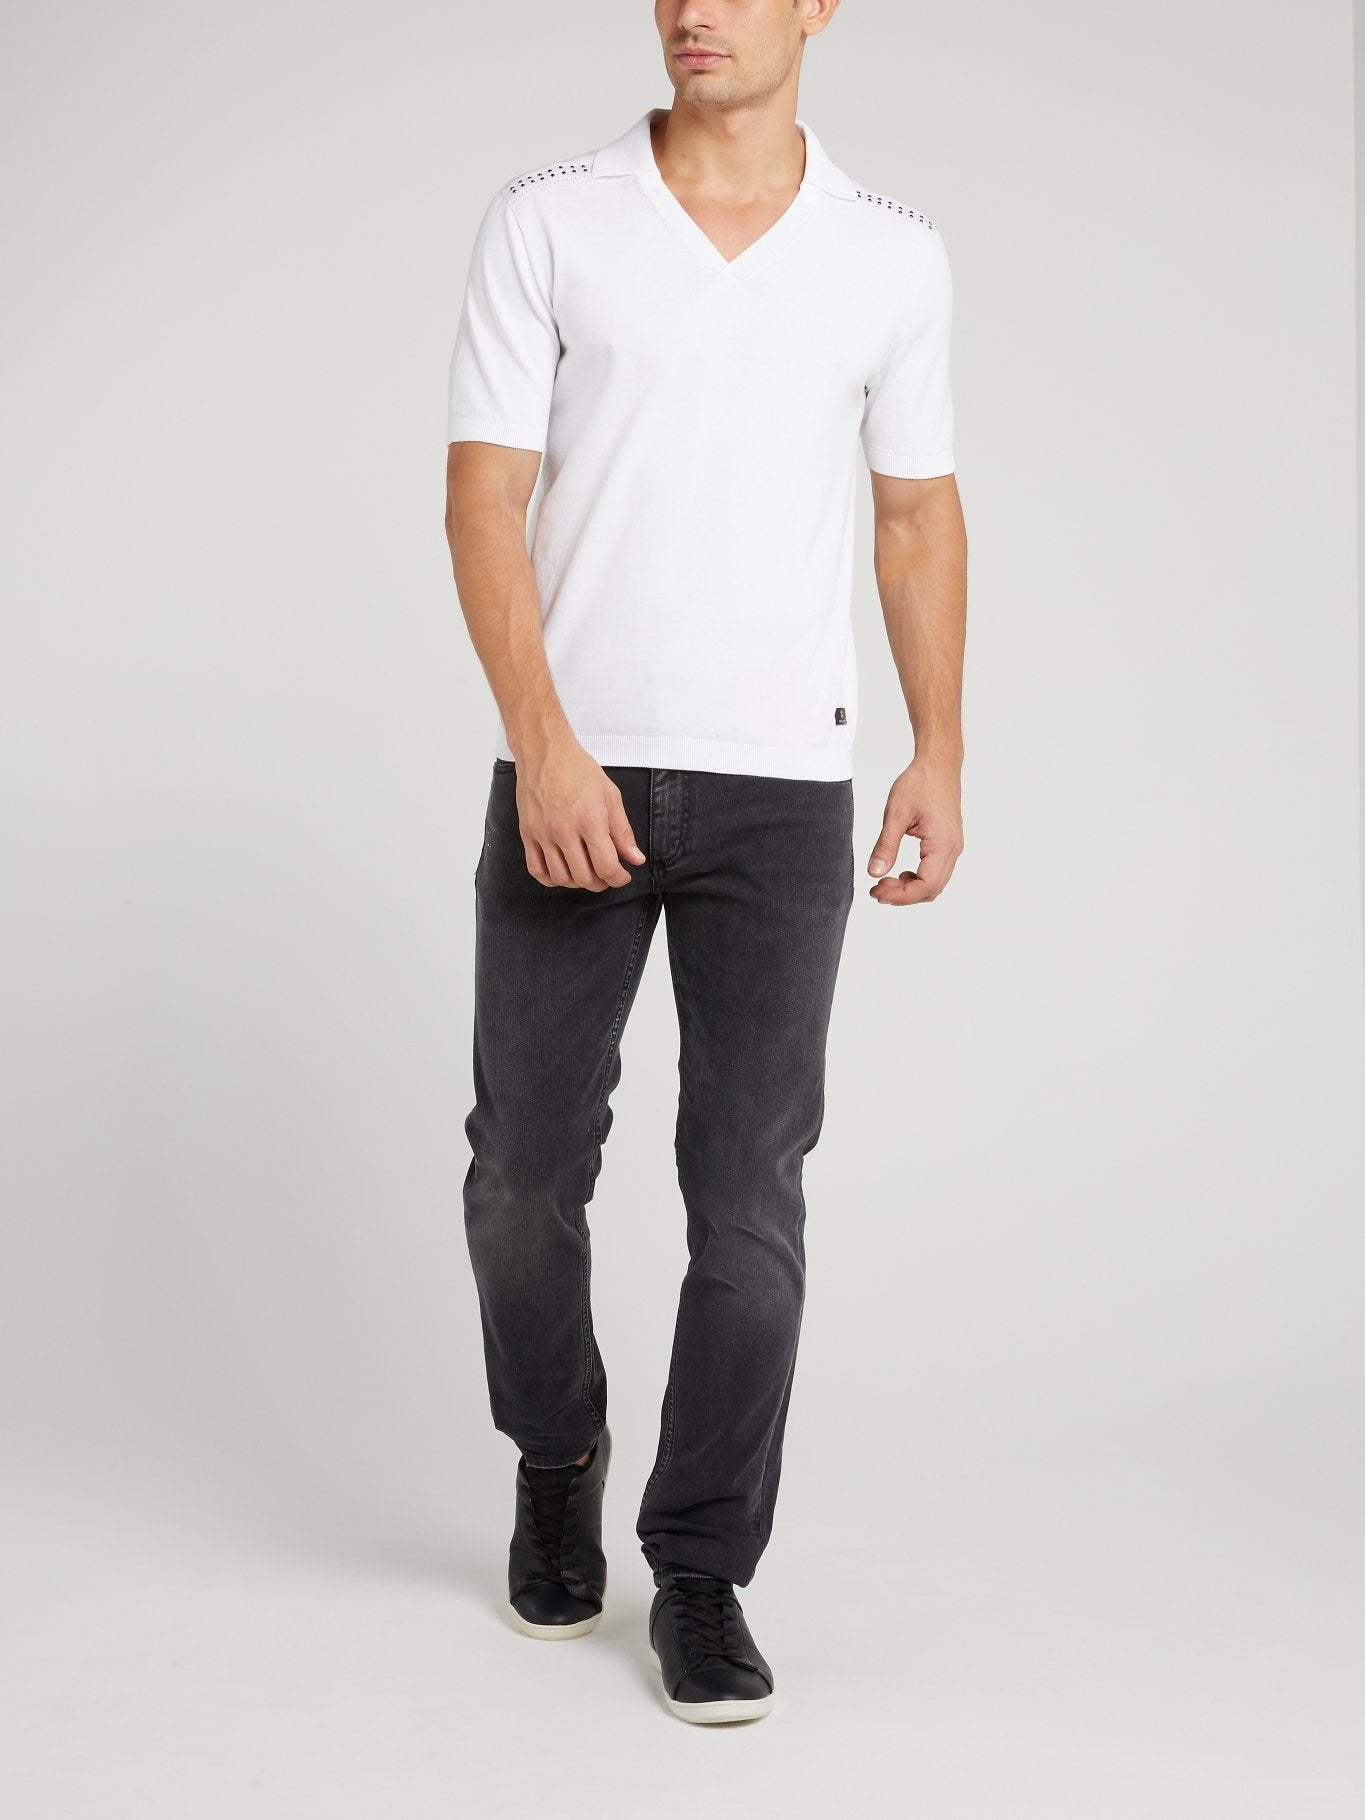 White Short Collared T-Shirt